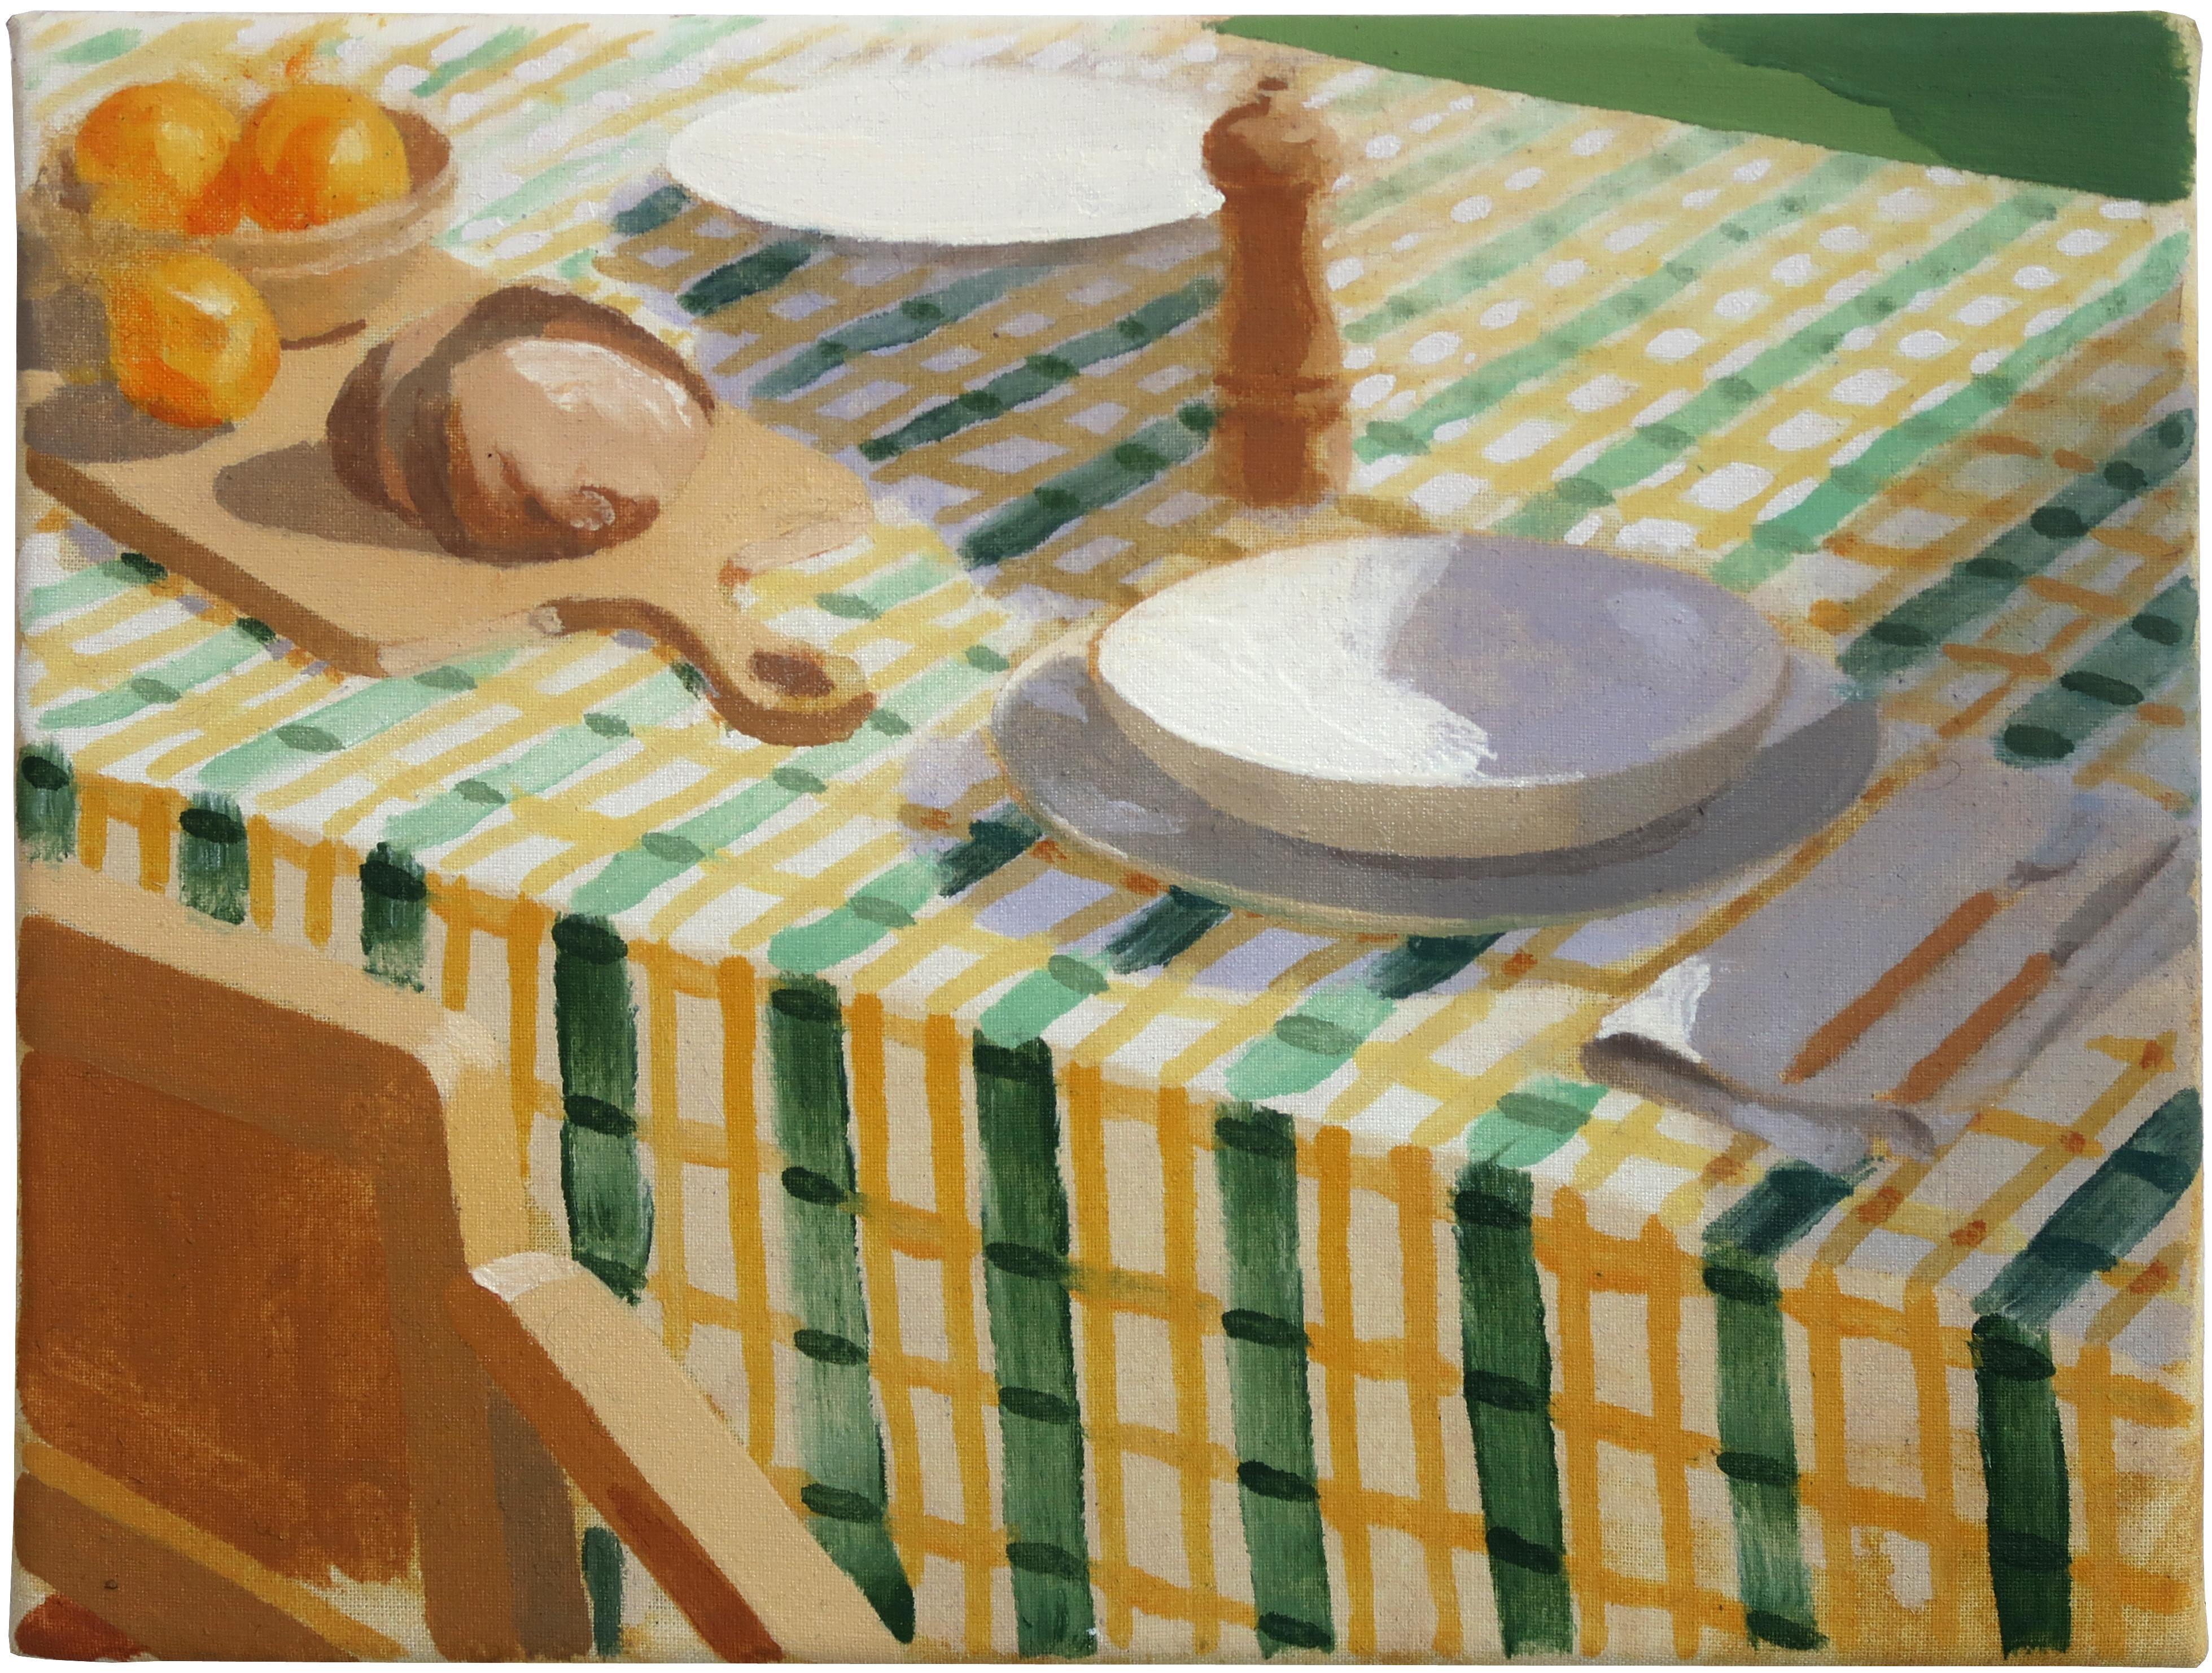 Breakfast- 21st Century Contemporary Dutch Still-life Painting